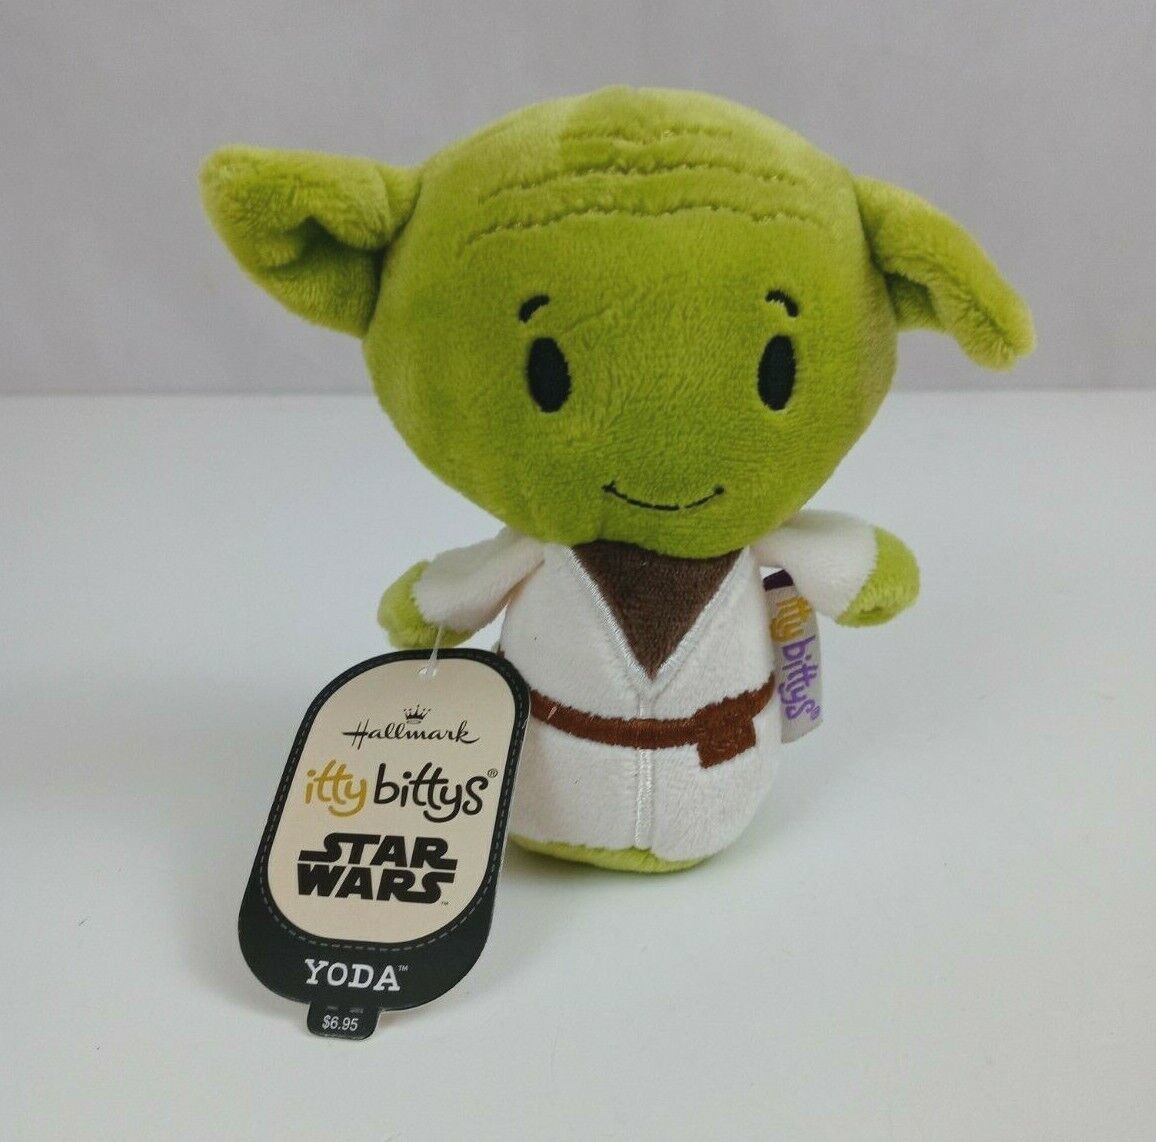 Primary image for New Hallmark Itty Bittys Star Wars Yoda 4.5" Mini Bean Bag Plush